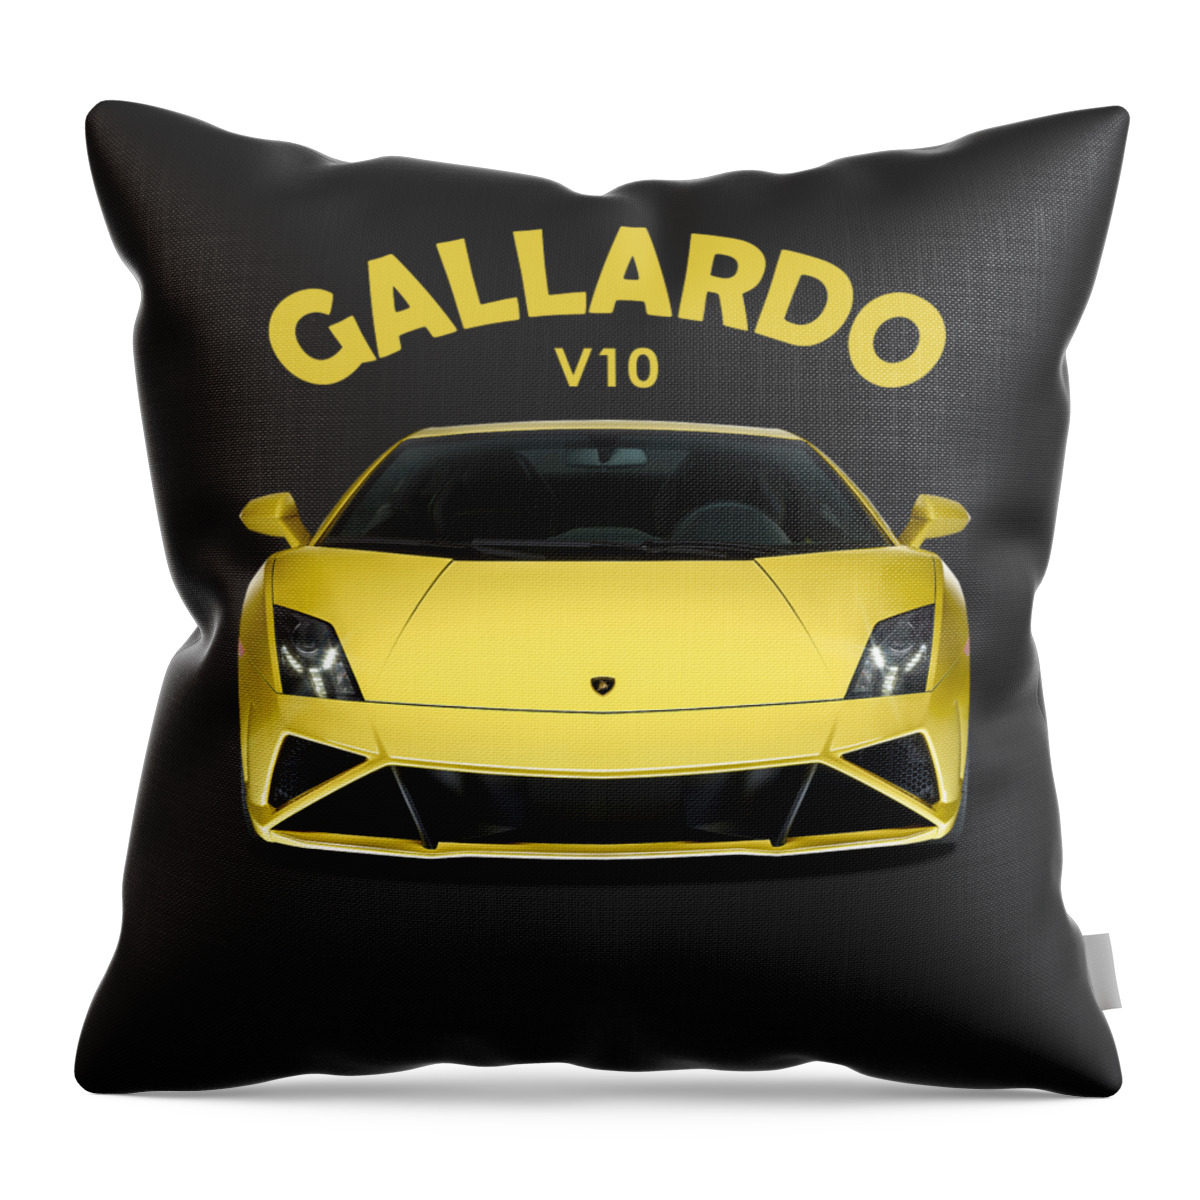 Lamborghini Gallardo Throw Pillow featuring the photograph The Gallardo #2 by Mark Rogan